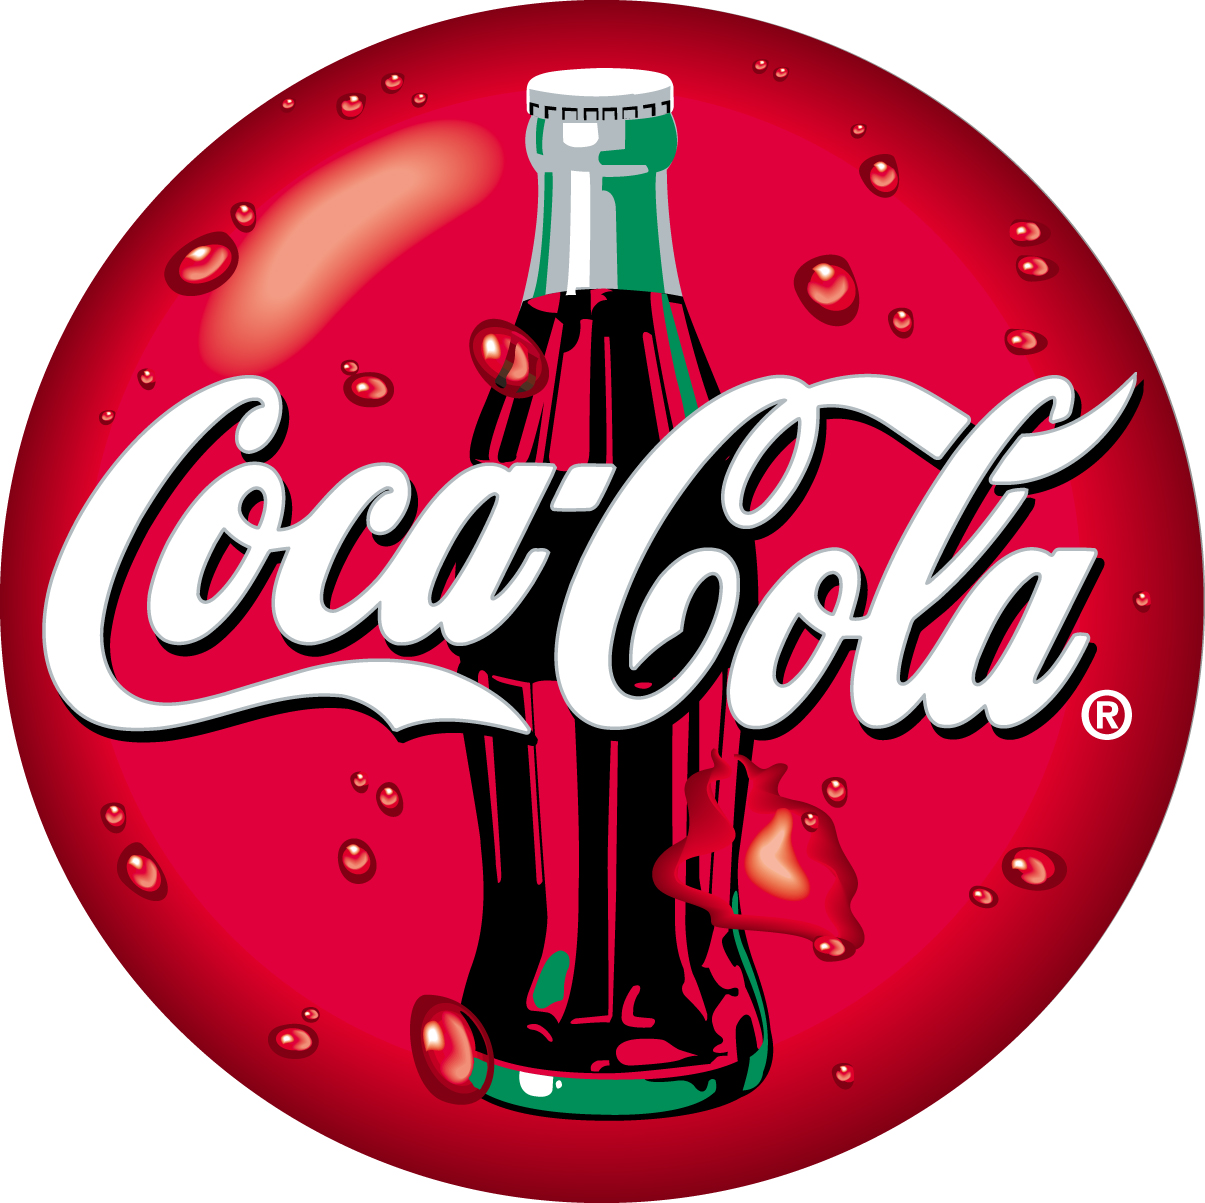 http://miguelarino.files.wordpress.com/2010/11/coca-cola-logo2.jpg